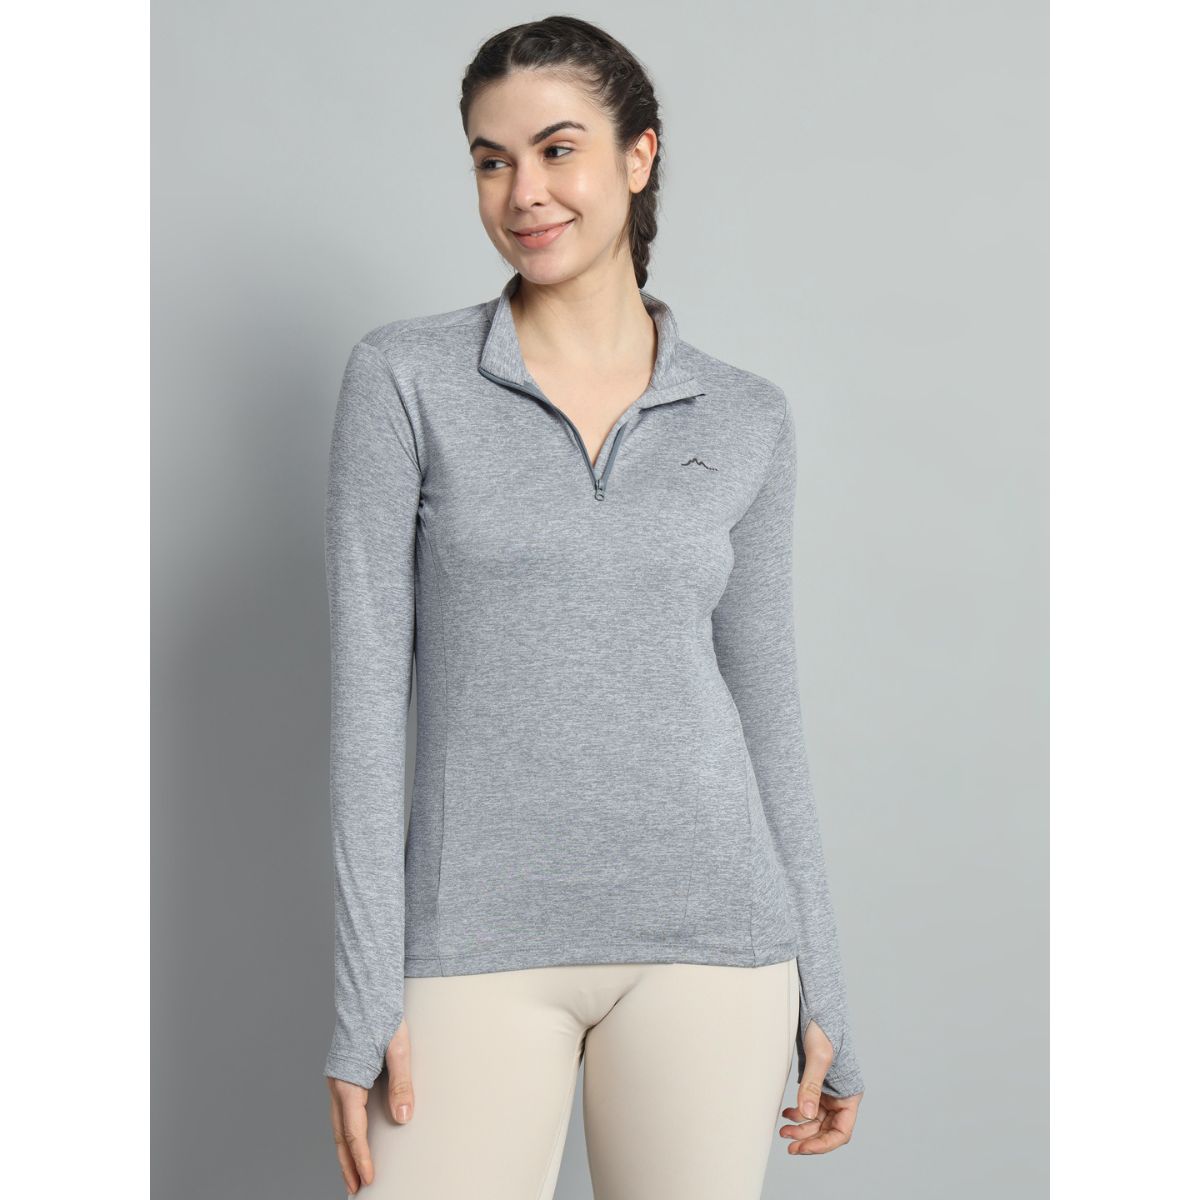 Women's Nomadic Full Sleeves T-Shirt / Baselayer - Silver Gray 6